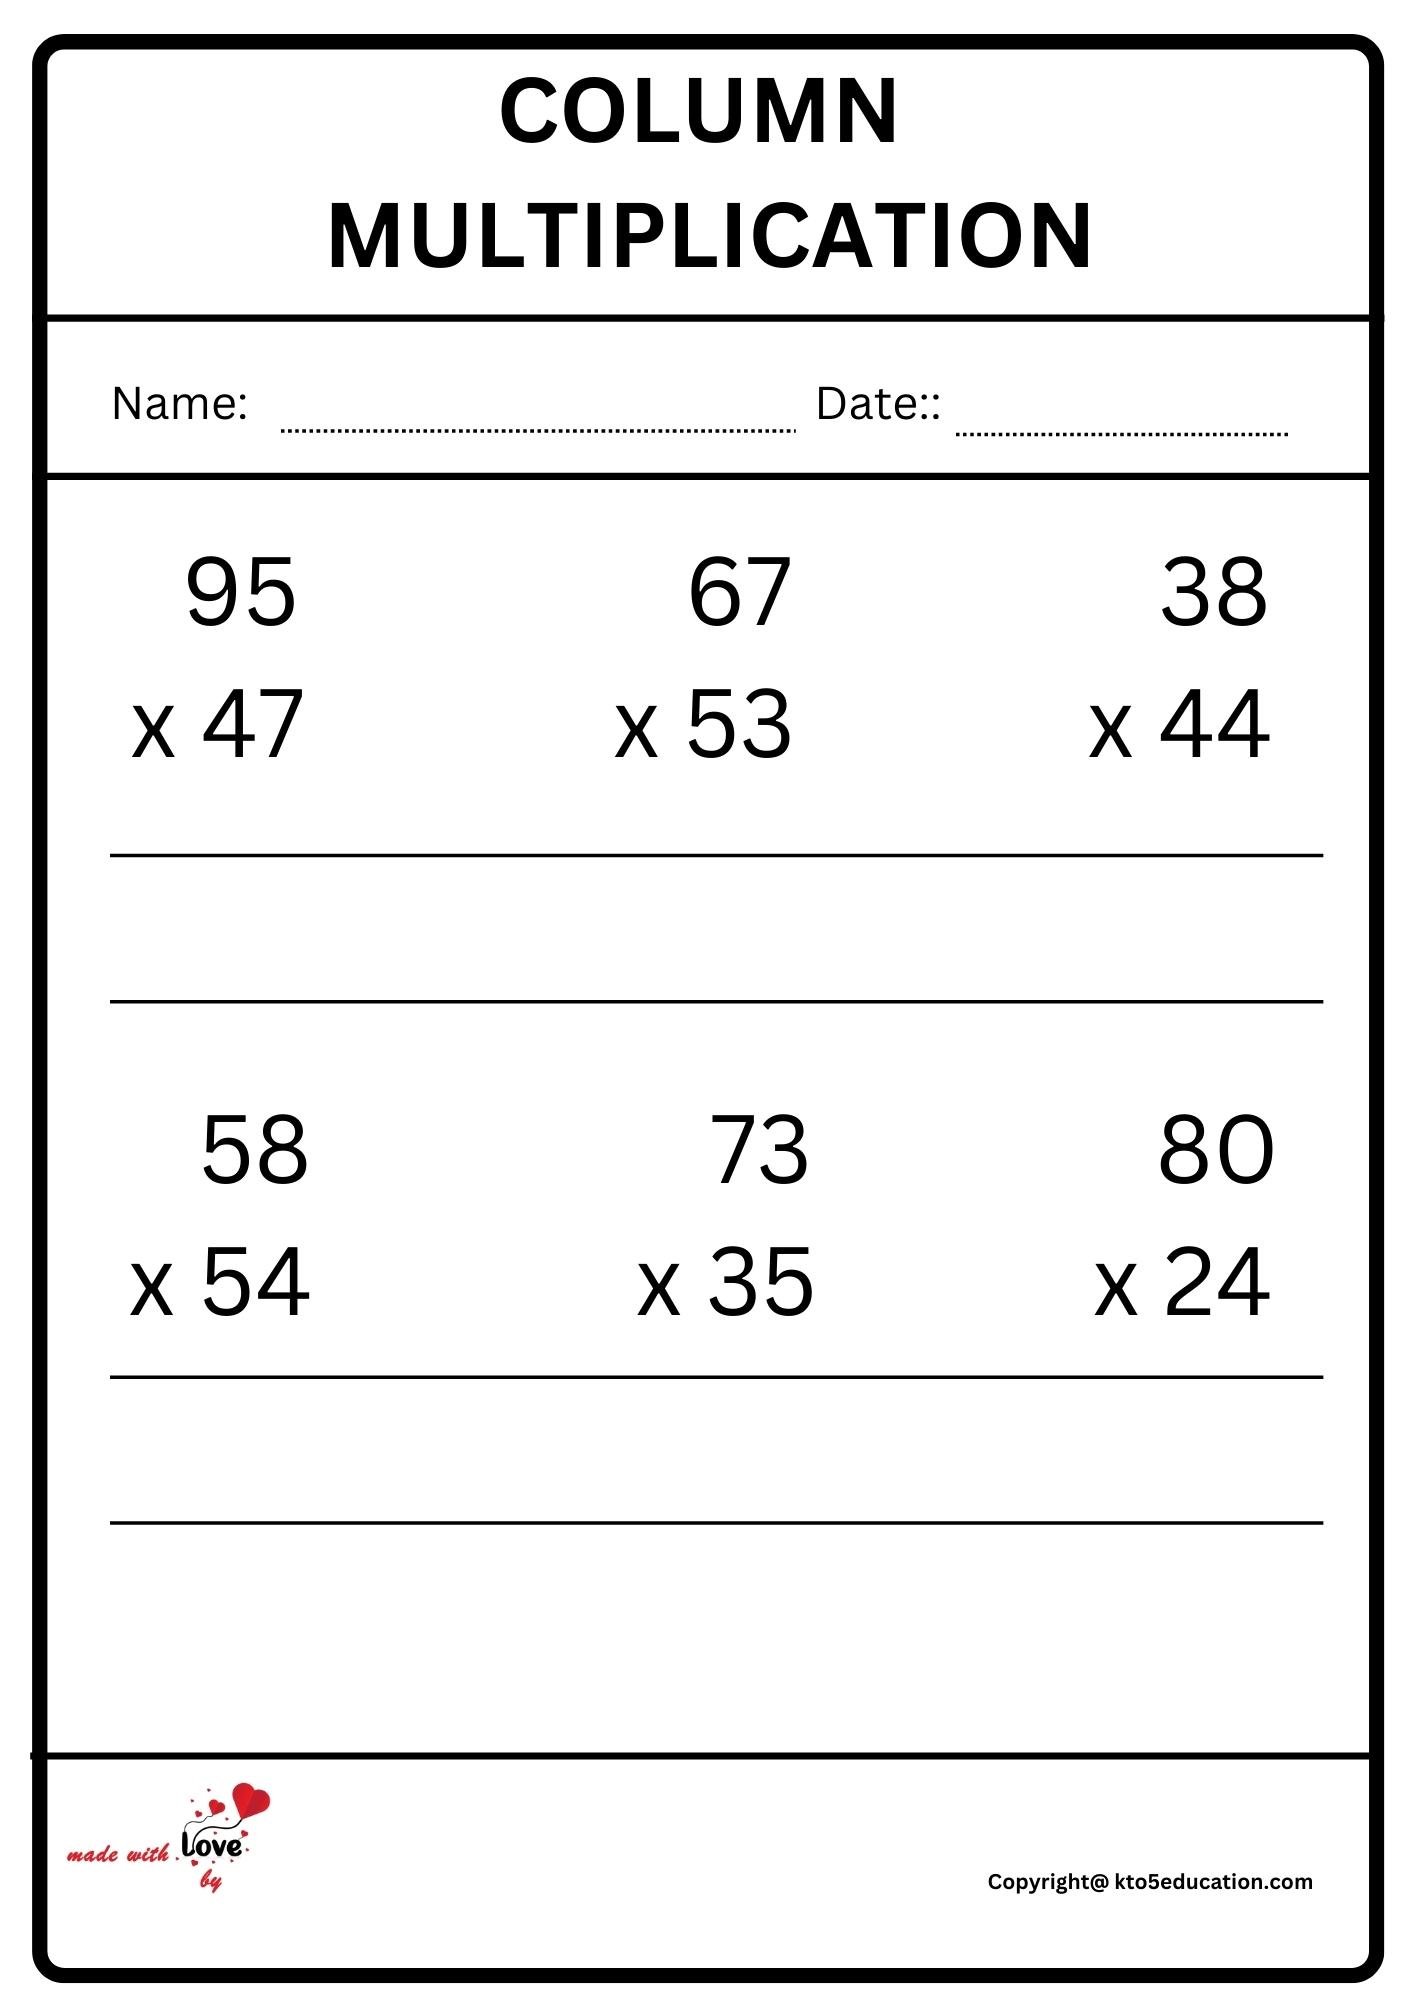 Column Multiplication Worksheet